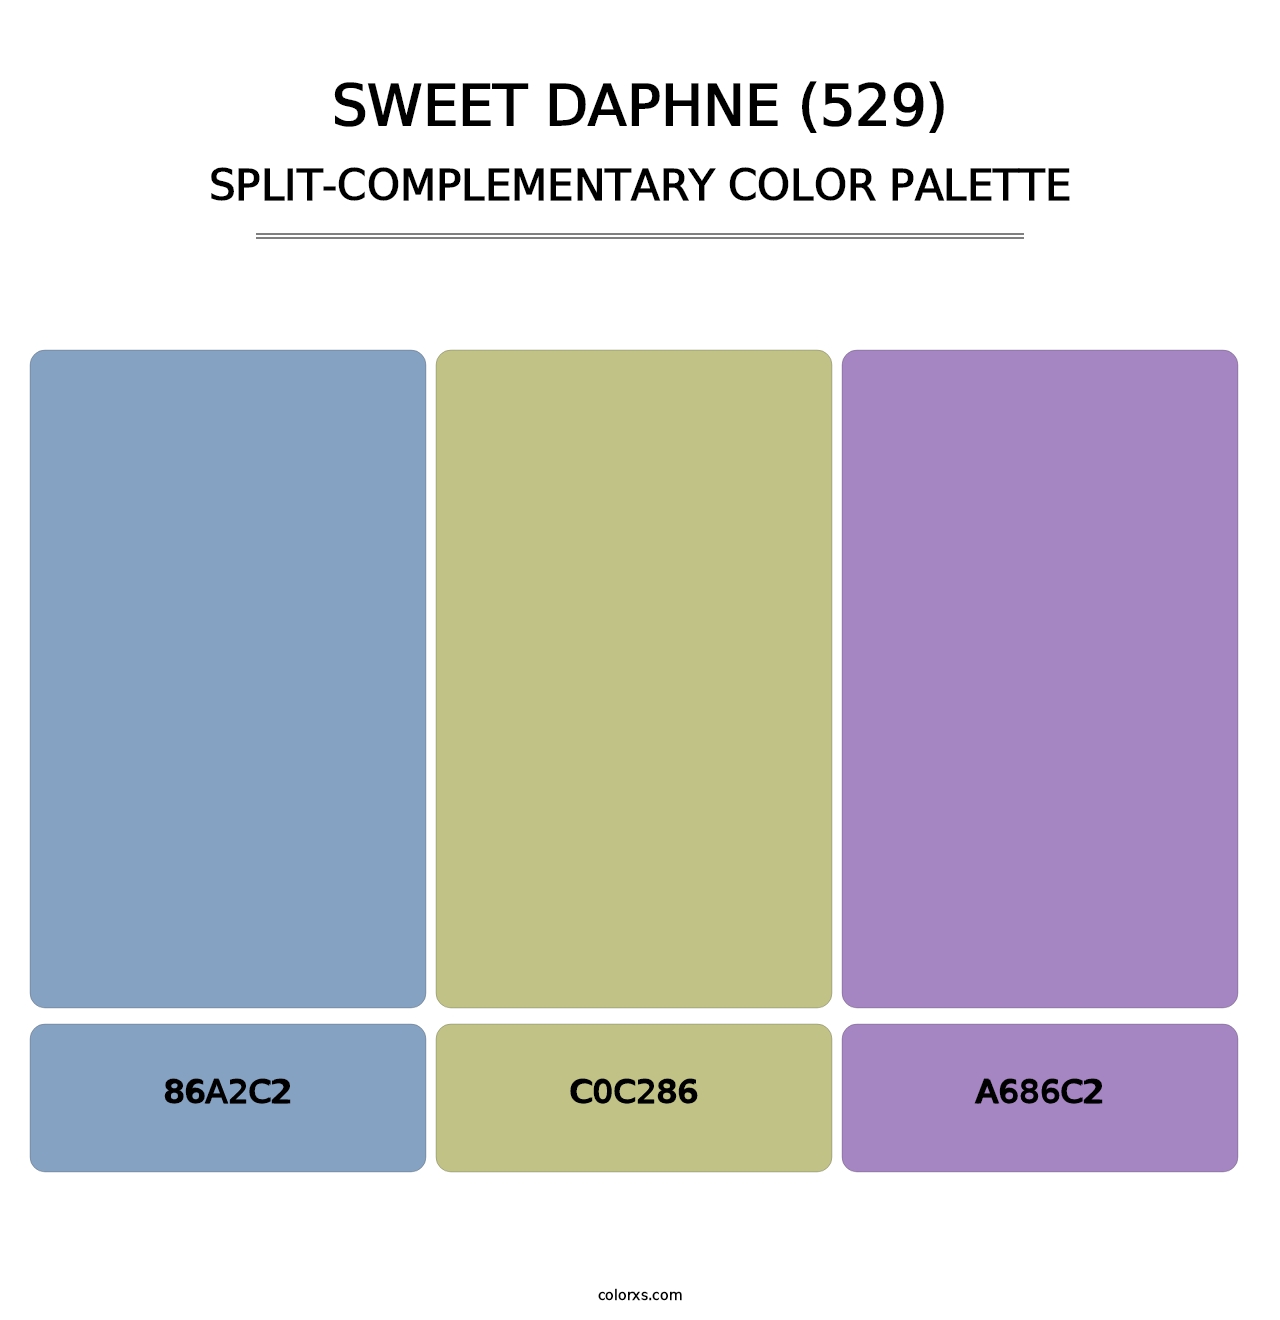 Sweet Daphne (529) - Split-Complementary Color Palette